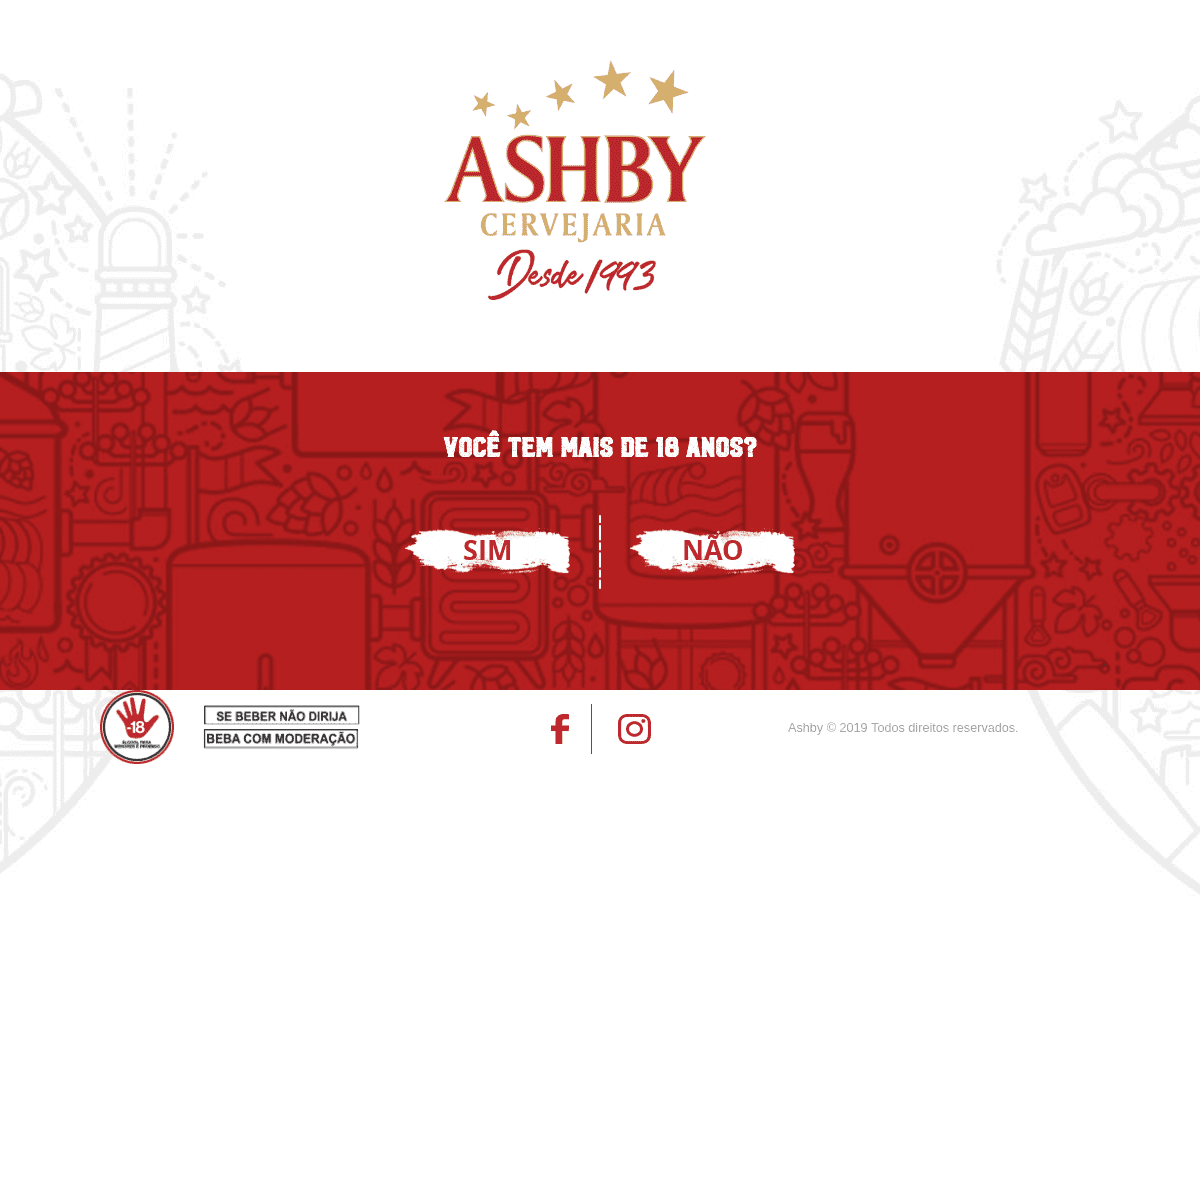 A complete backup of ashby.com.br